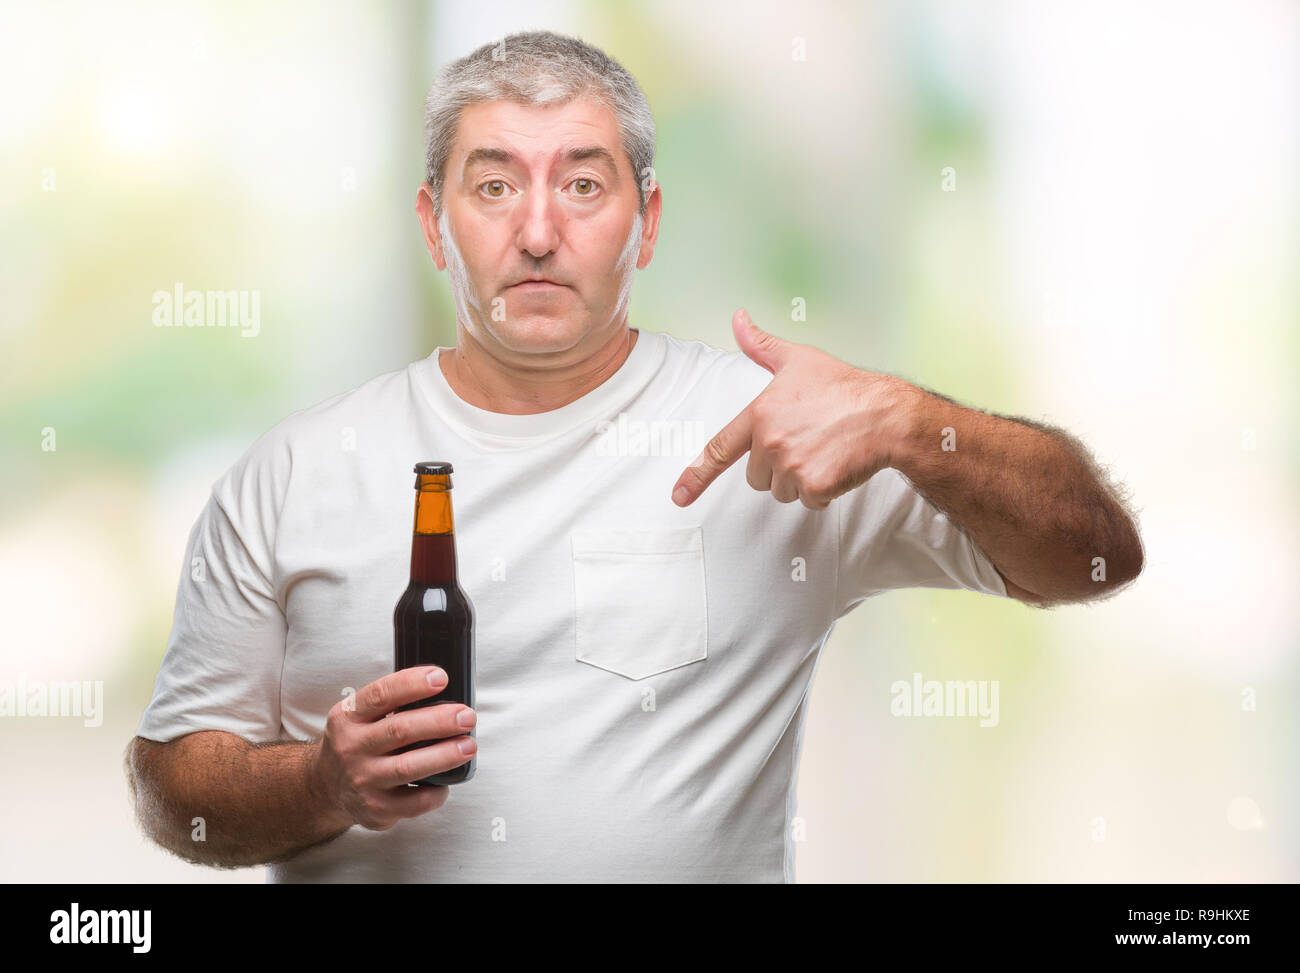 opraken Beven Kennis maken Handsome senior man drinking beer bottle over isolated background with  surprise face pointing finger to himself Stock Photo - Alamy